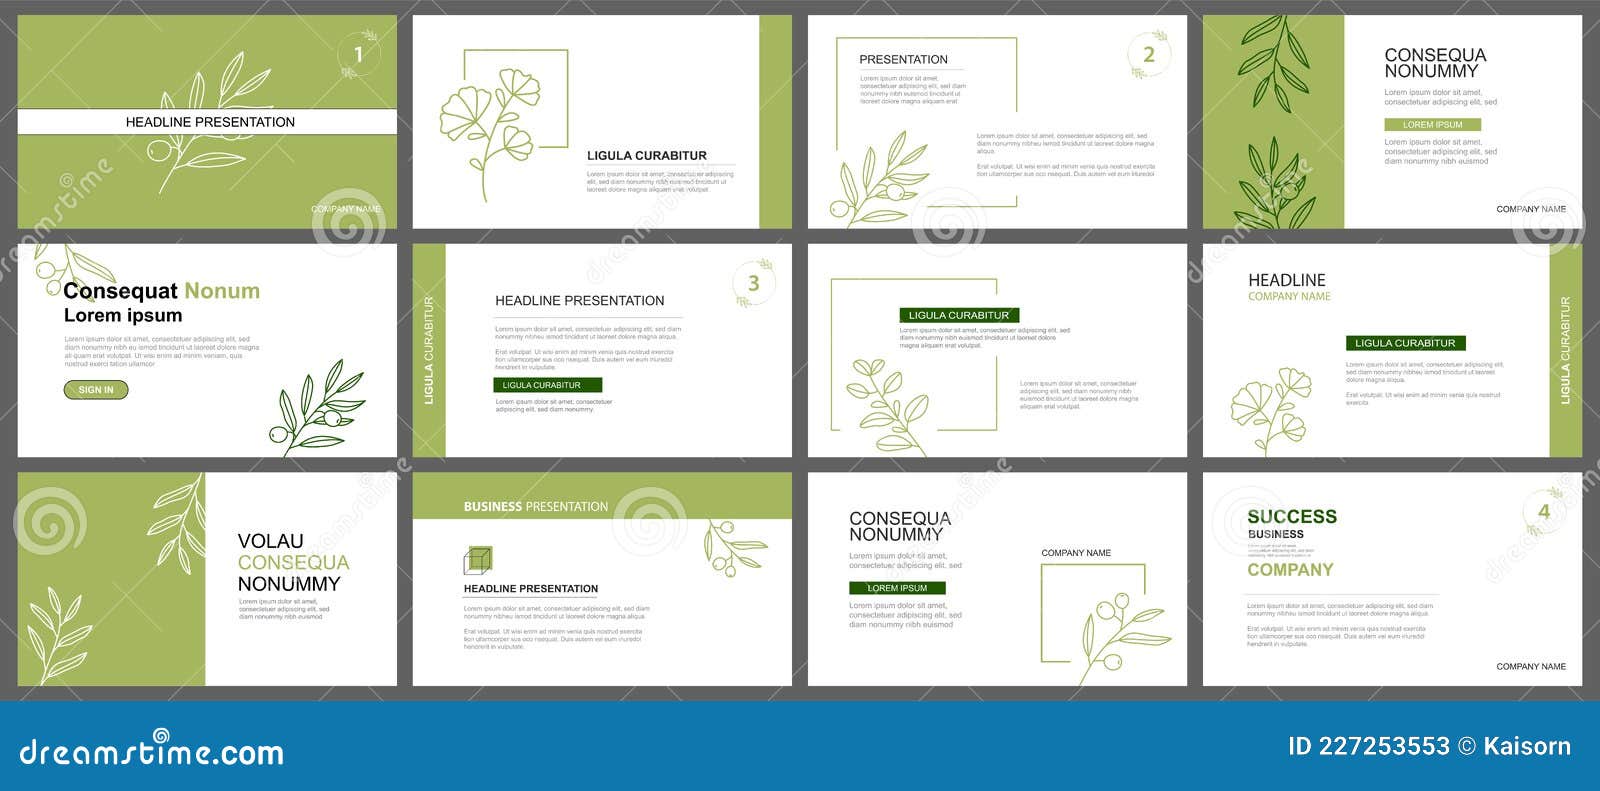 presentation and slide layout background.  green leaves template. use for business keynote, presentation, slide, marketing,